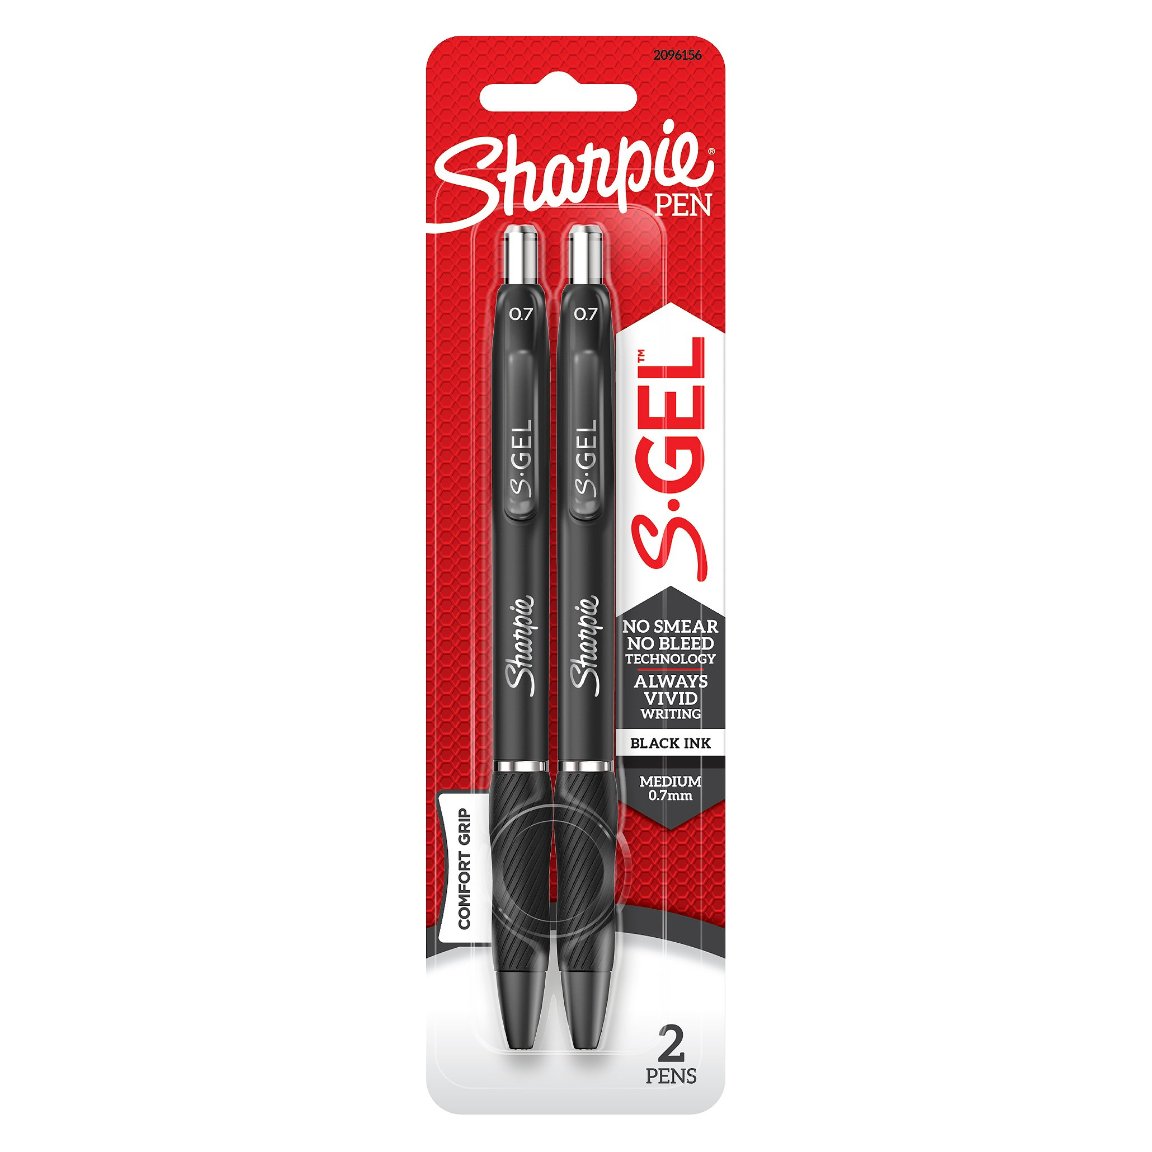 Scribble & Scribe Sketchbook with Gel Pen Set - Shop Kits at H-E-B